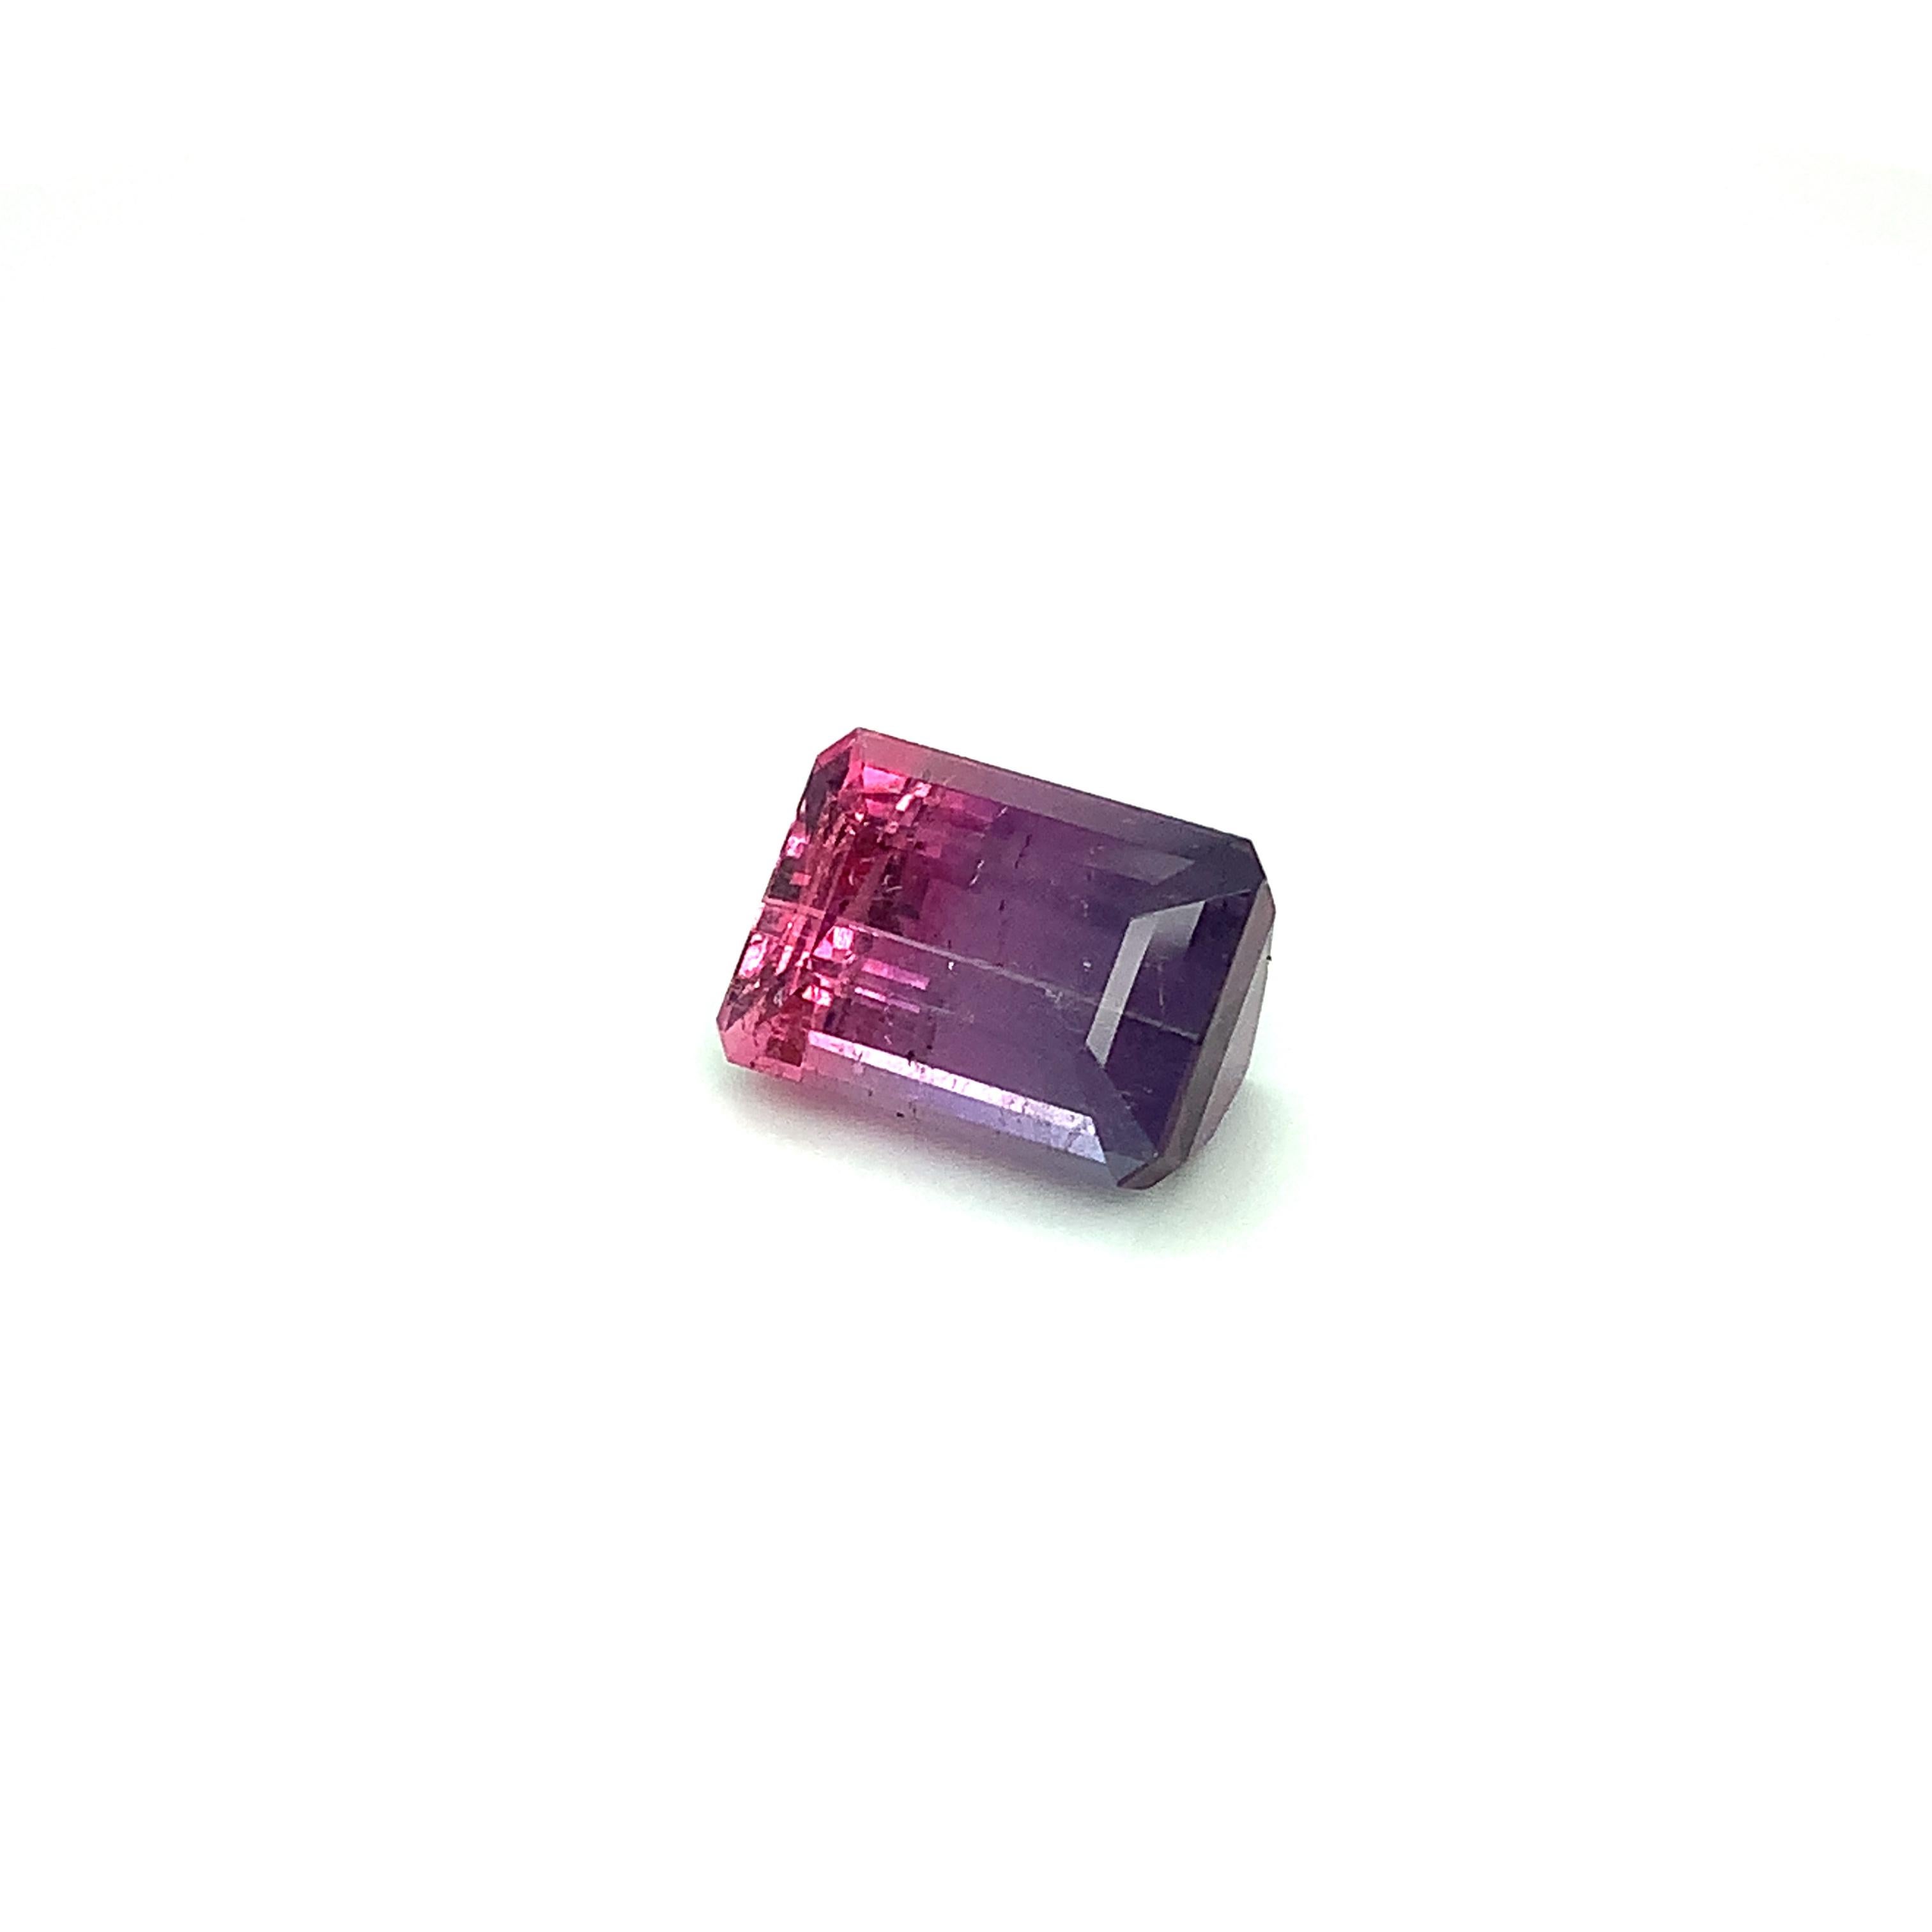 Loser loser 10,90 Karat lila-rosa Turmalin in Teilfarben-Optik, ungefasster Ring oder Anhänger Edelstein (Smaragdschliff) im Angebot